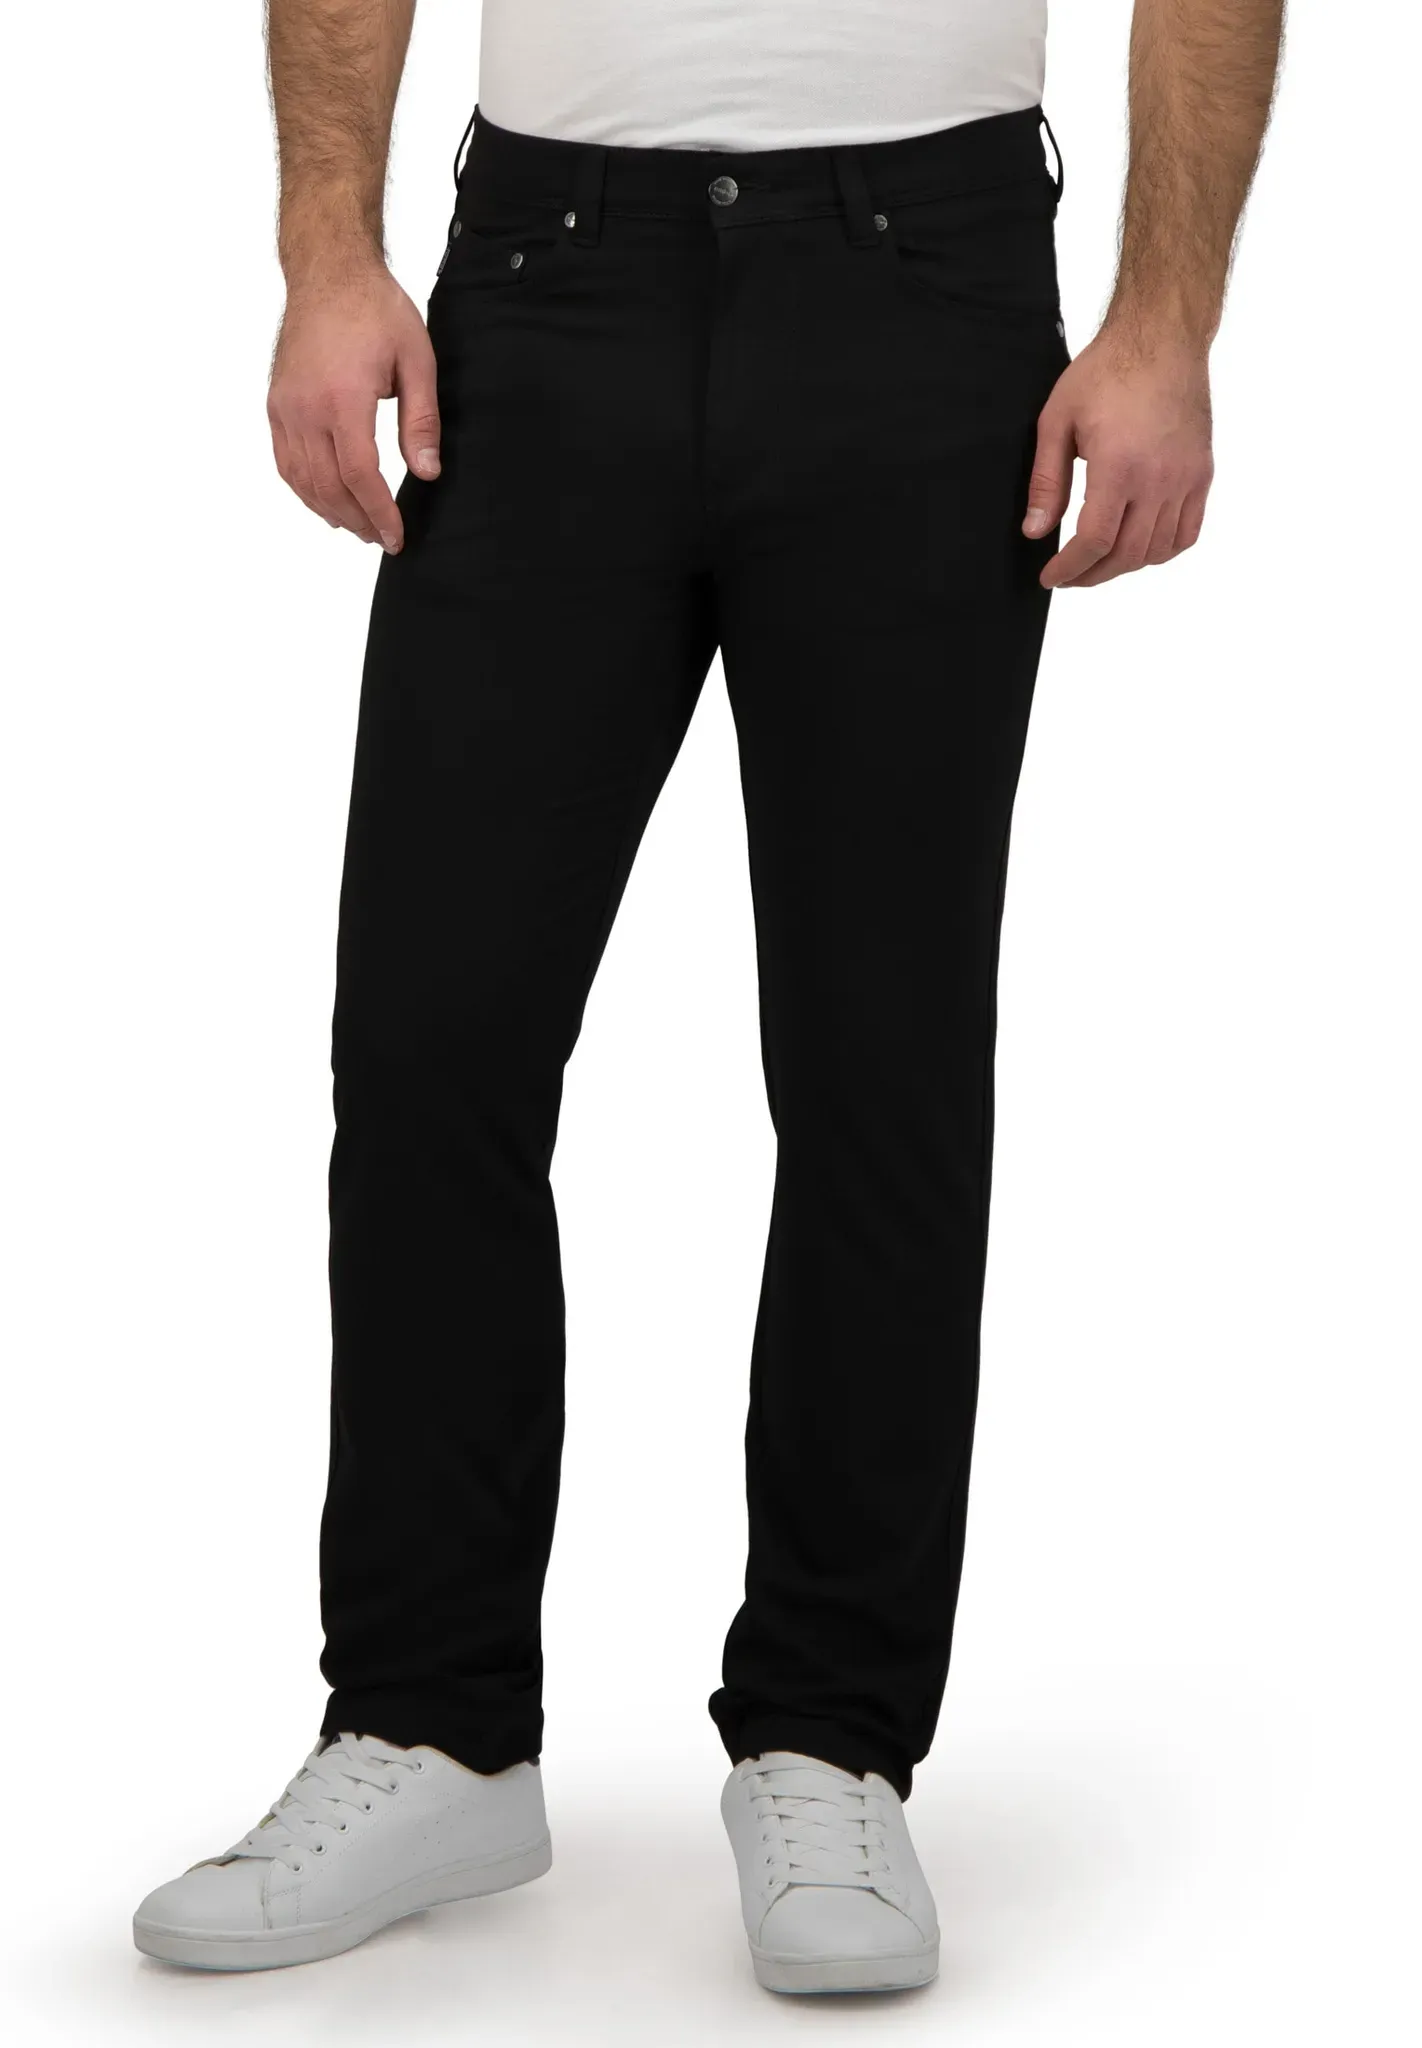 Bequeme Jeans BRÜHL "Genua III 1" Gr. 62, EURO-Größen, schwarz Herren Jeans 5-Pocket-Jeans Straight-fit-Jeans Stretchjeans Stretch